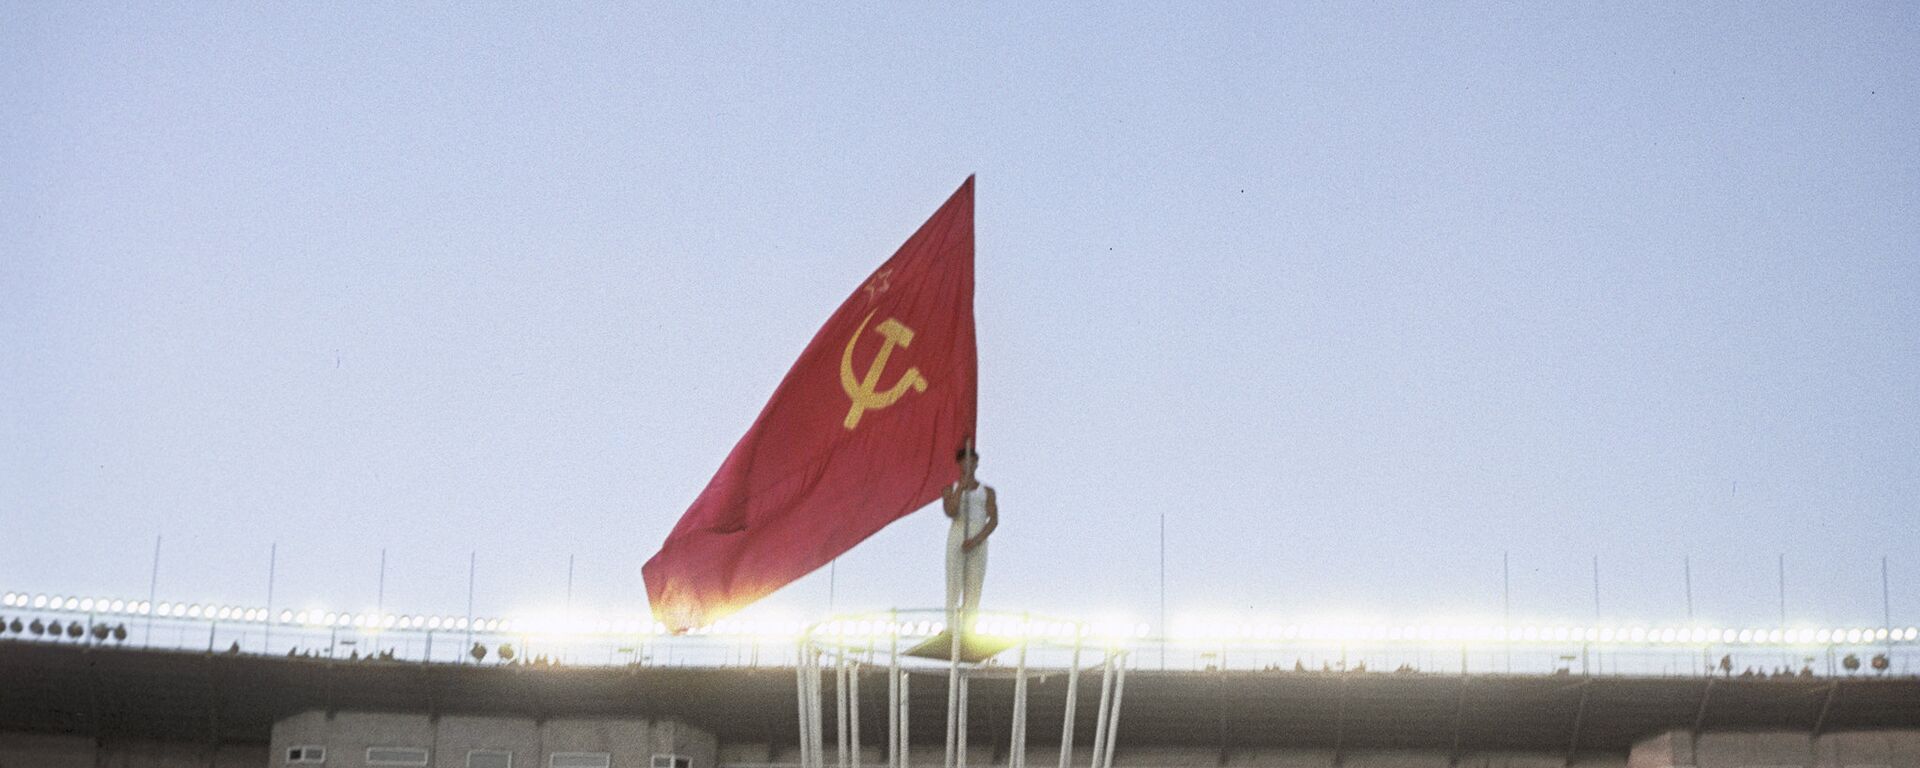 Bandera de la URSS (imagen referencial) - Sputnik Mundo, 1920, 24.08.2018